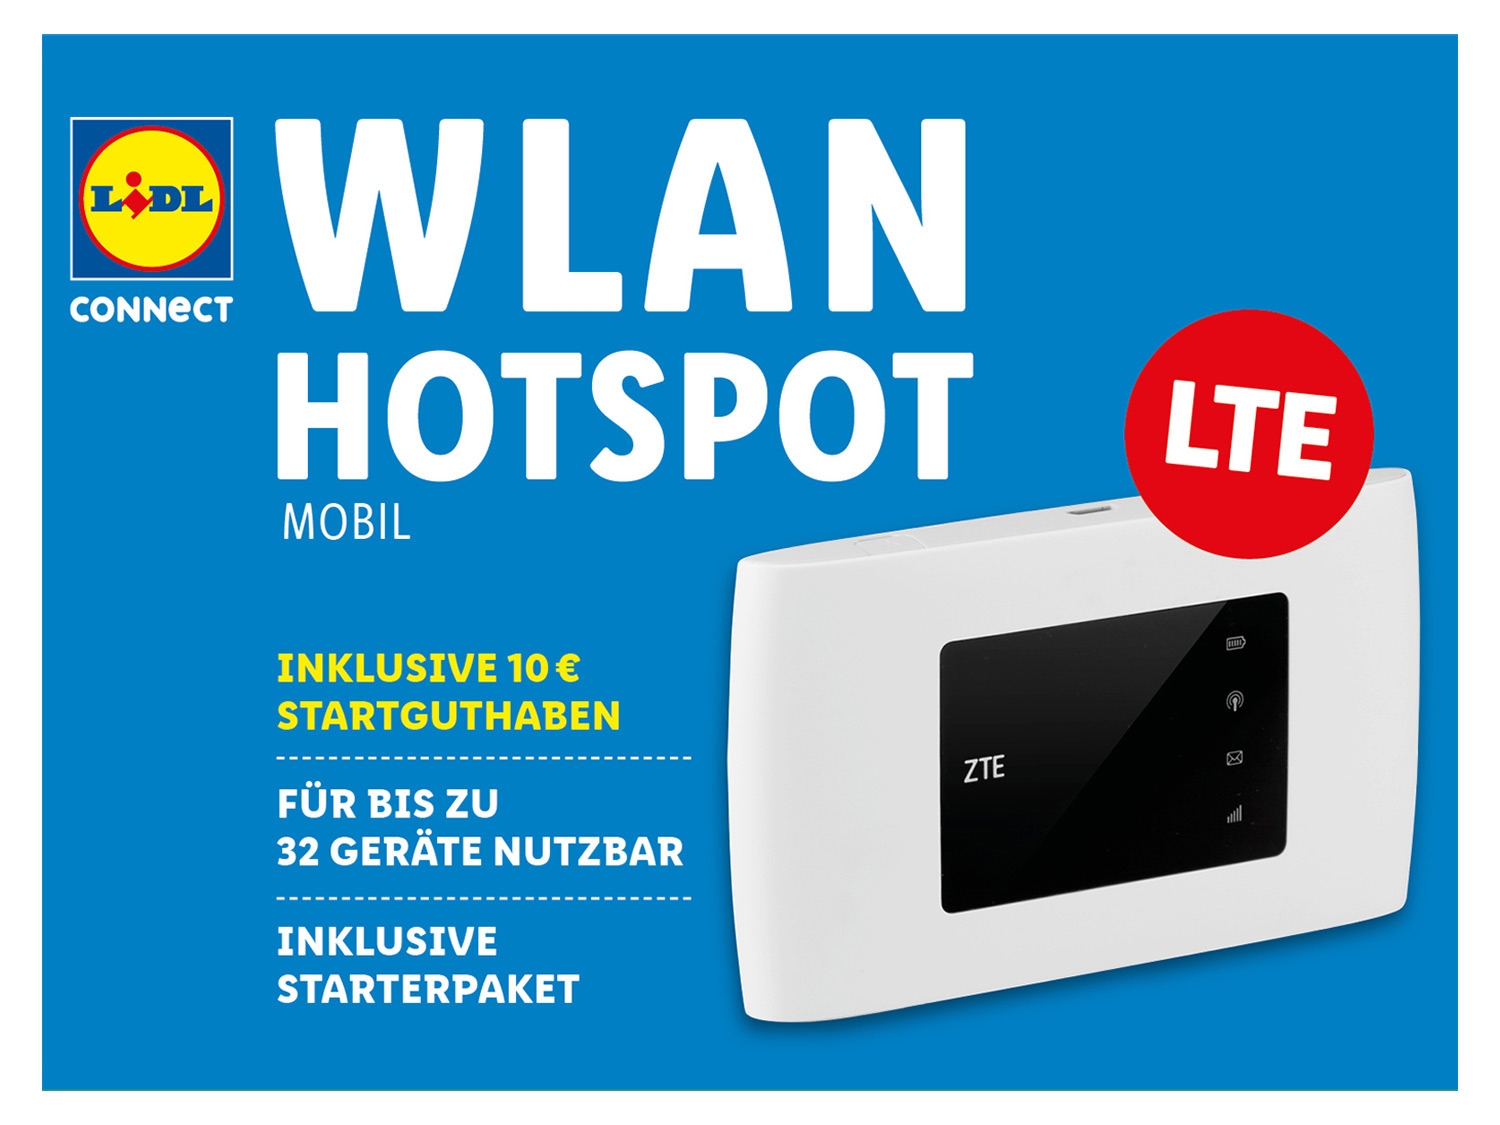 WLAN-Hotspot Lidl Connect online kaufen | LIDL